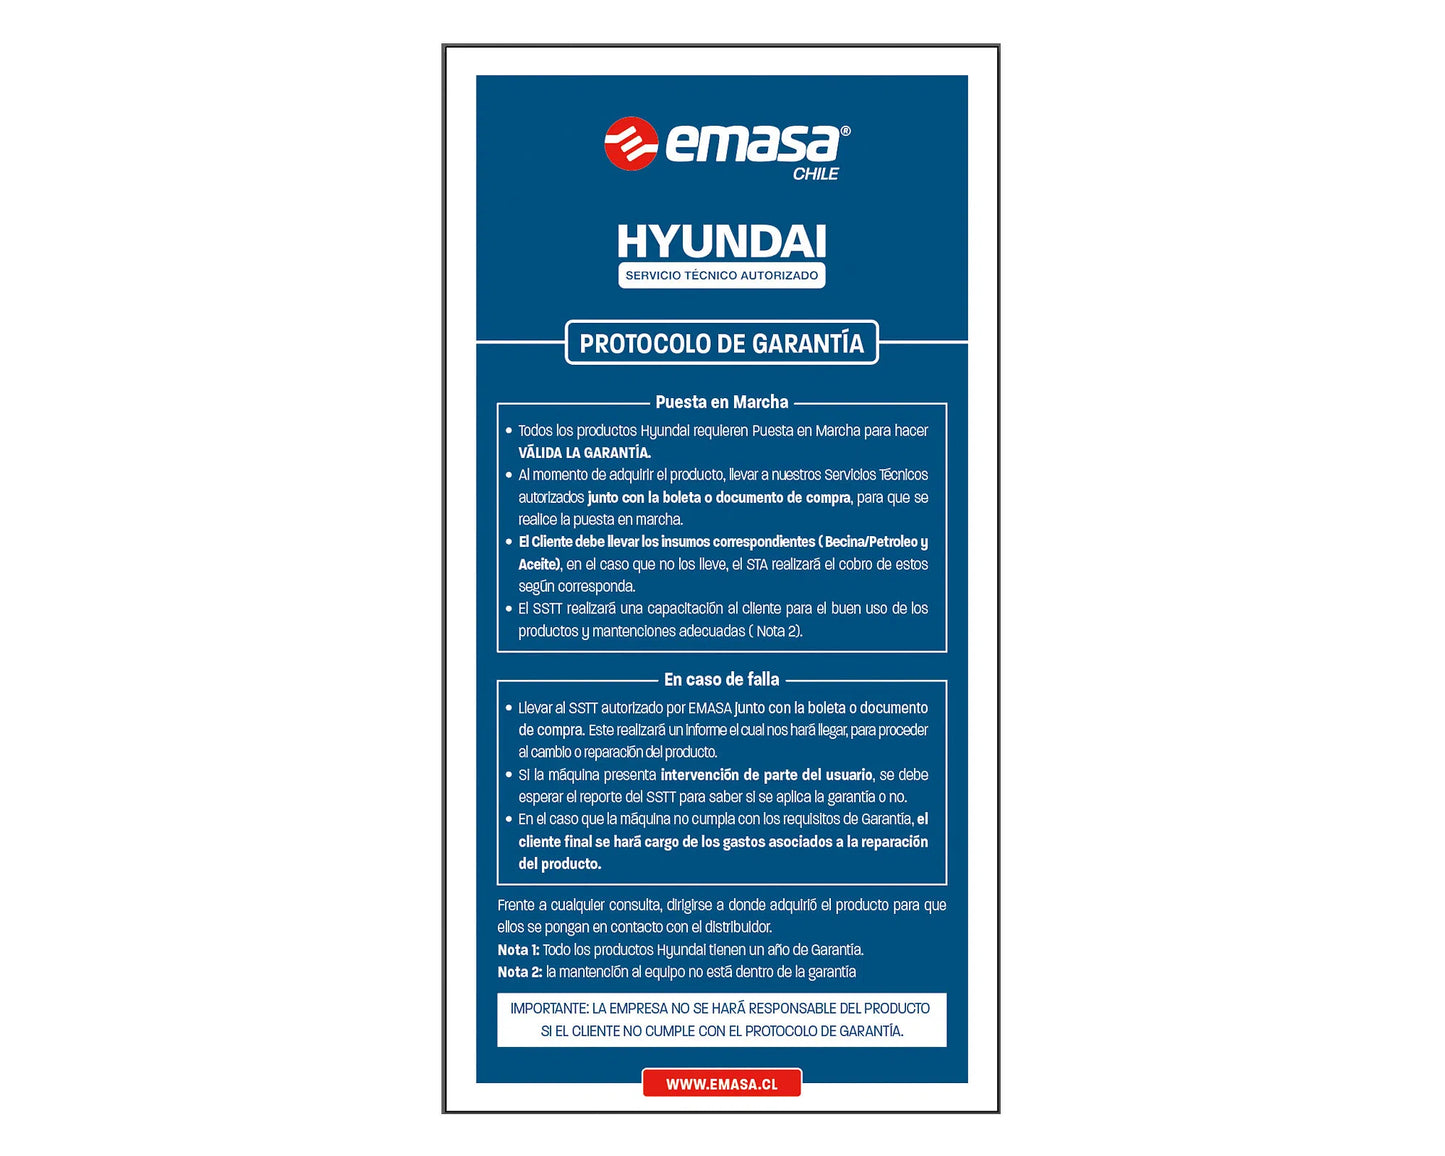 Generador Inverter Digital Hyundai Gasolina 2750w